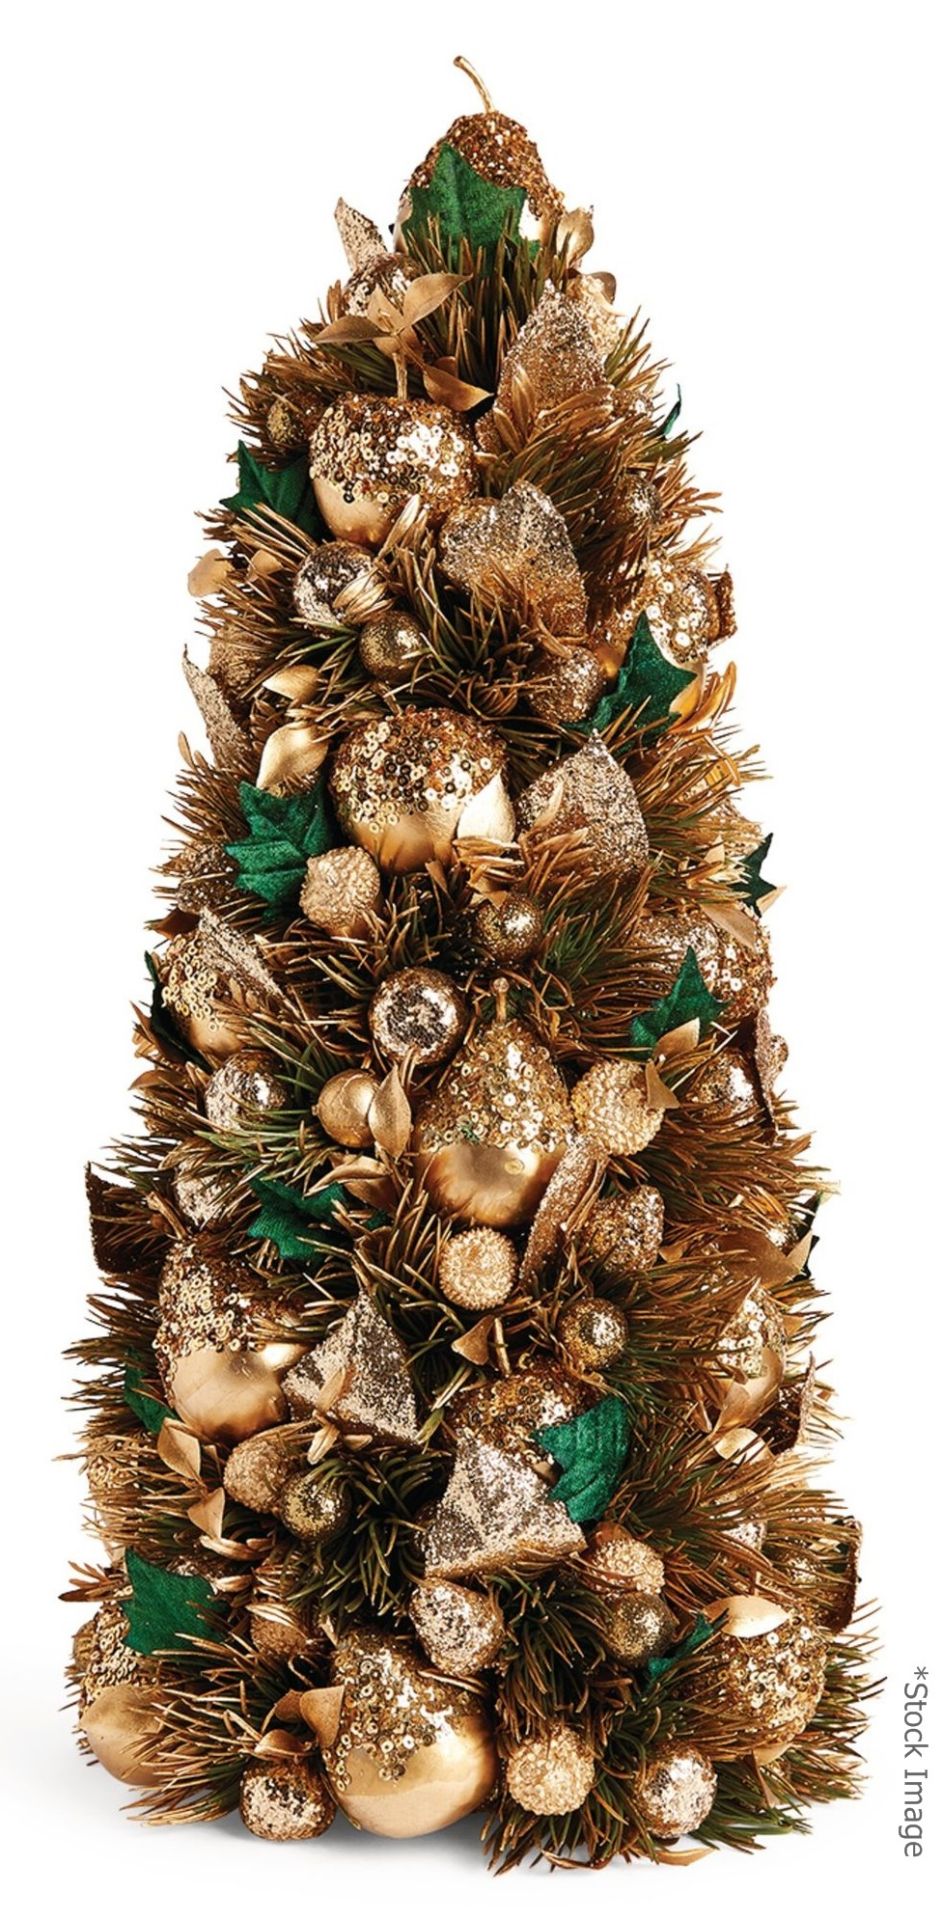 1 x SALZBURG CREATIONS Decorative 'Pear Tree' Ornament In Gold & Green - Original Price £300.00